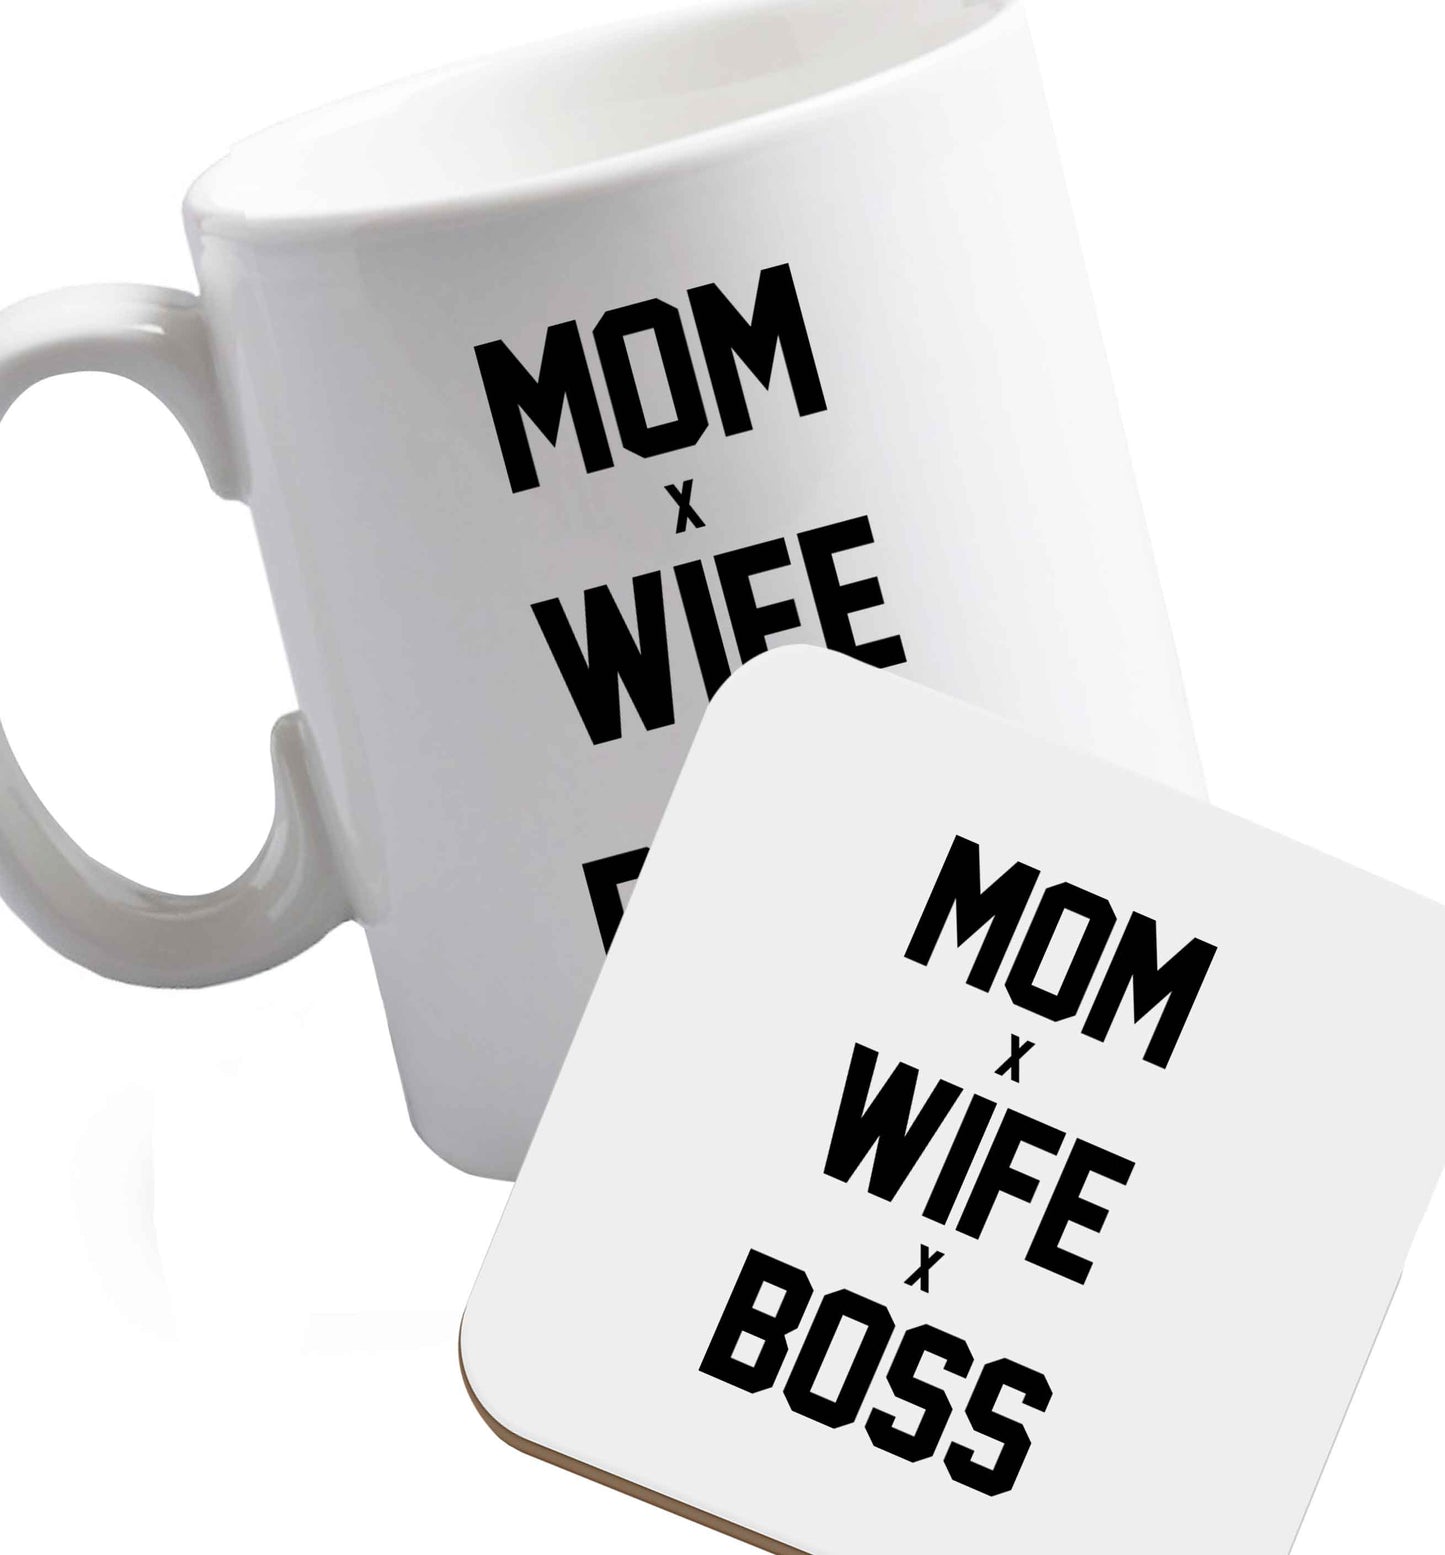 10 oz Mum wife boss ceramic mug and coaster set right handed